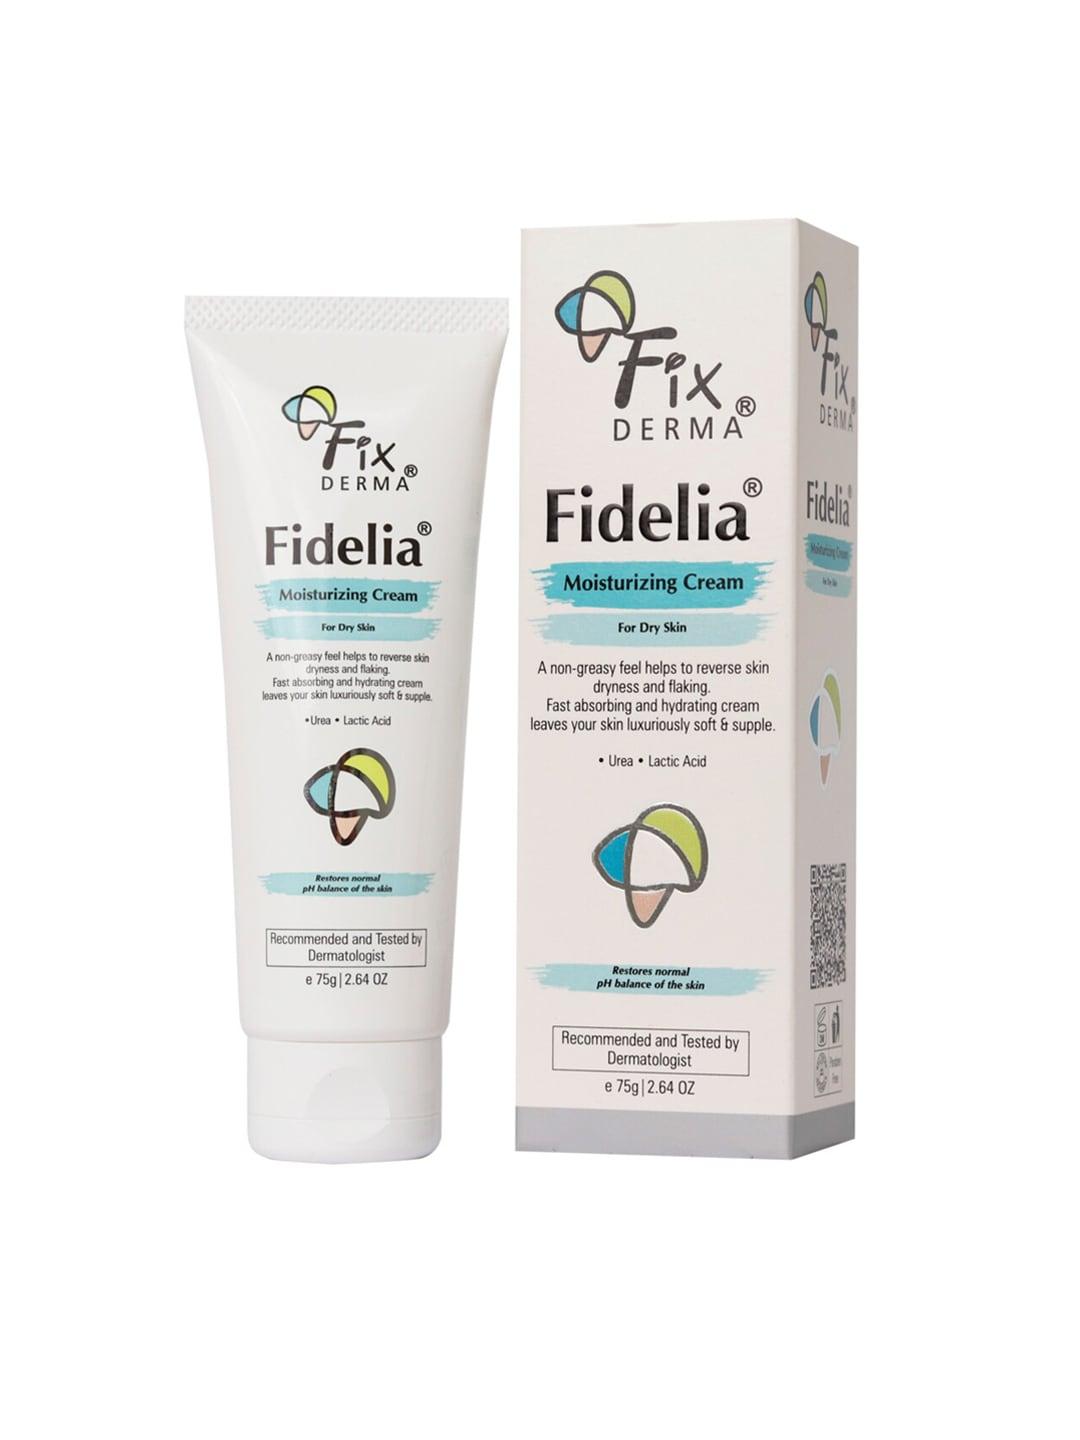 FIXDERMA Fidelia Moisturizing Cream with Urea & Lactic Acid - 75 g